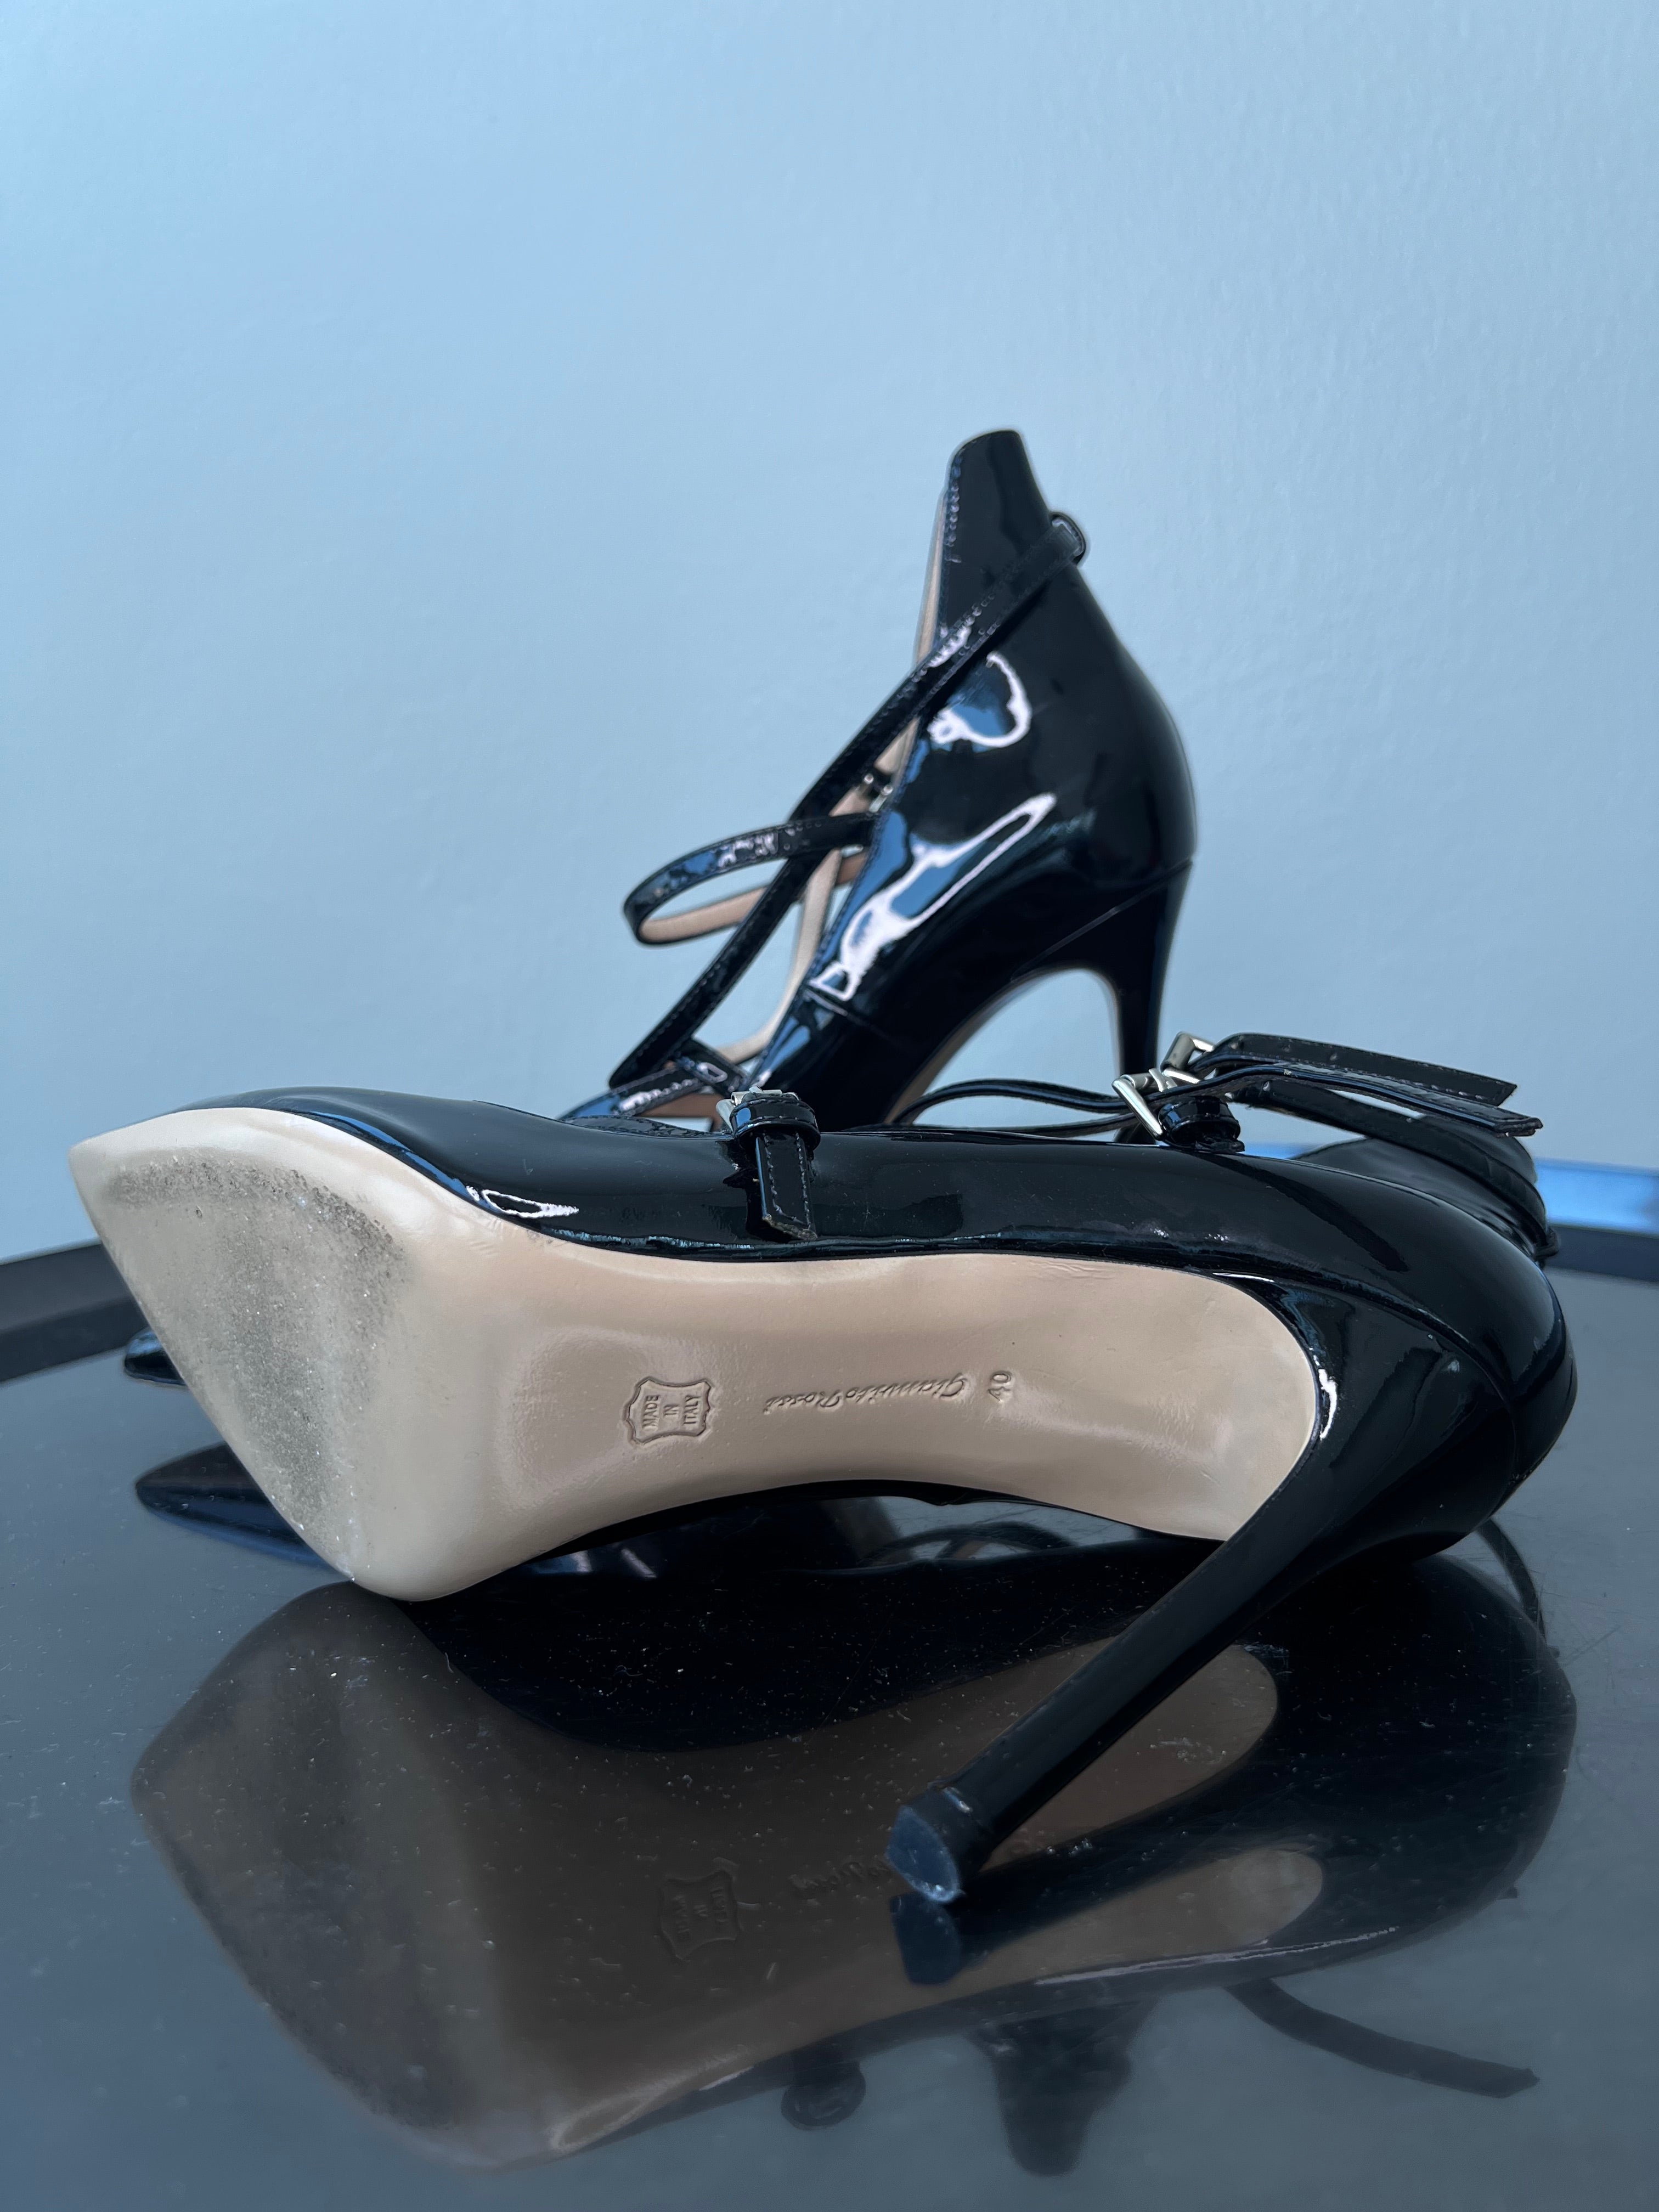 Black patent leather stilettoes heels - GIANVITO ROSSI